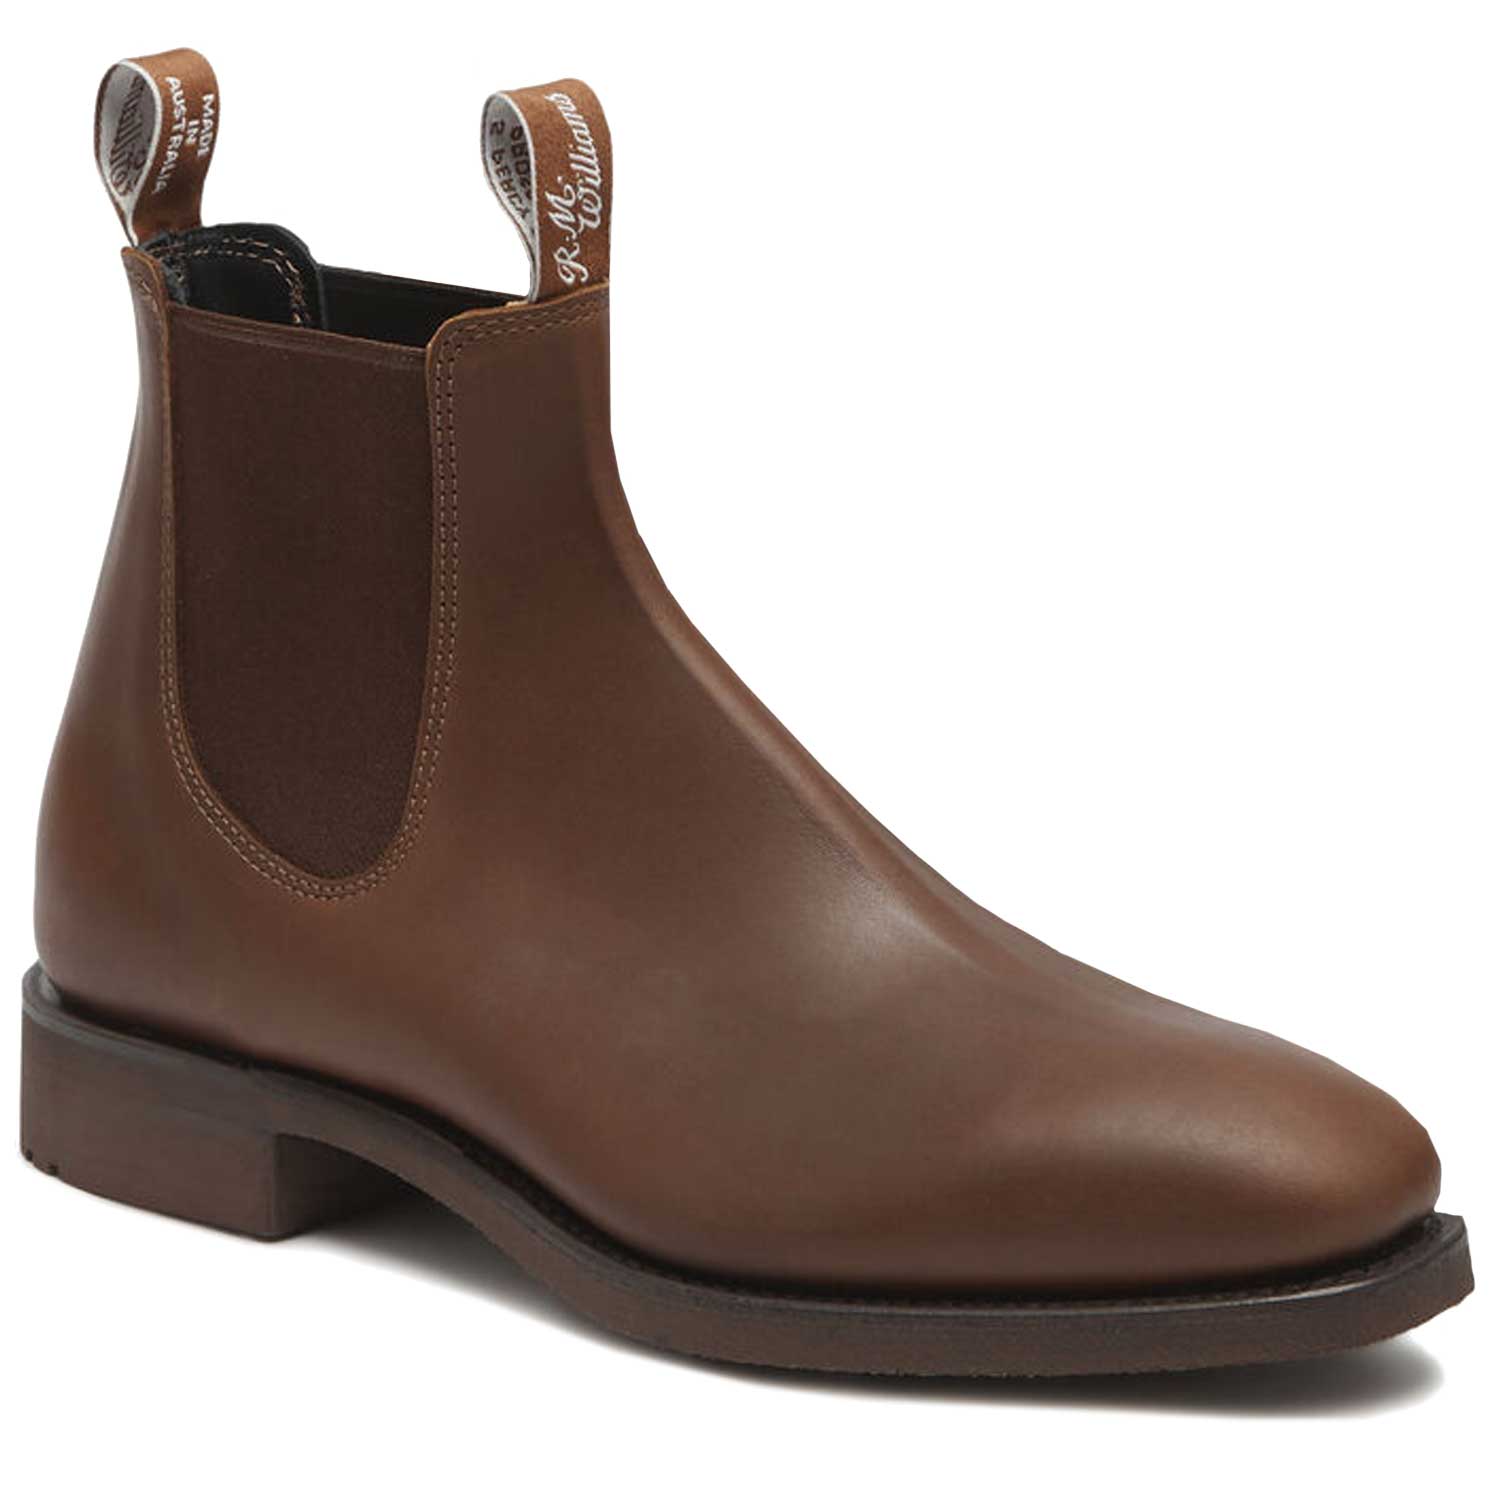 RM WILLIAMS Boots - Men's Lachlan - Water-Resistant Brown Vesta